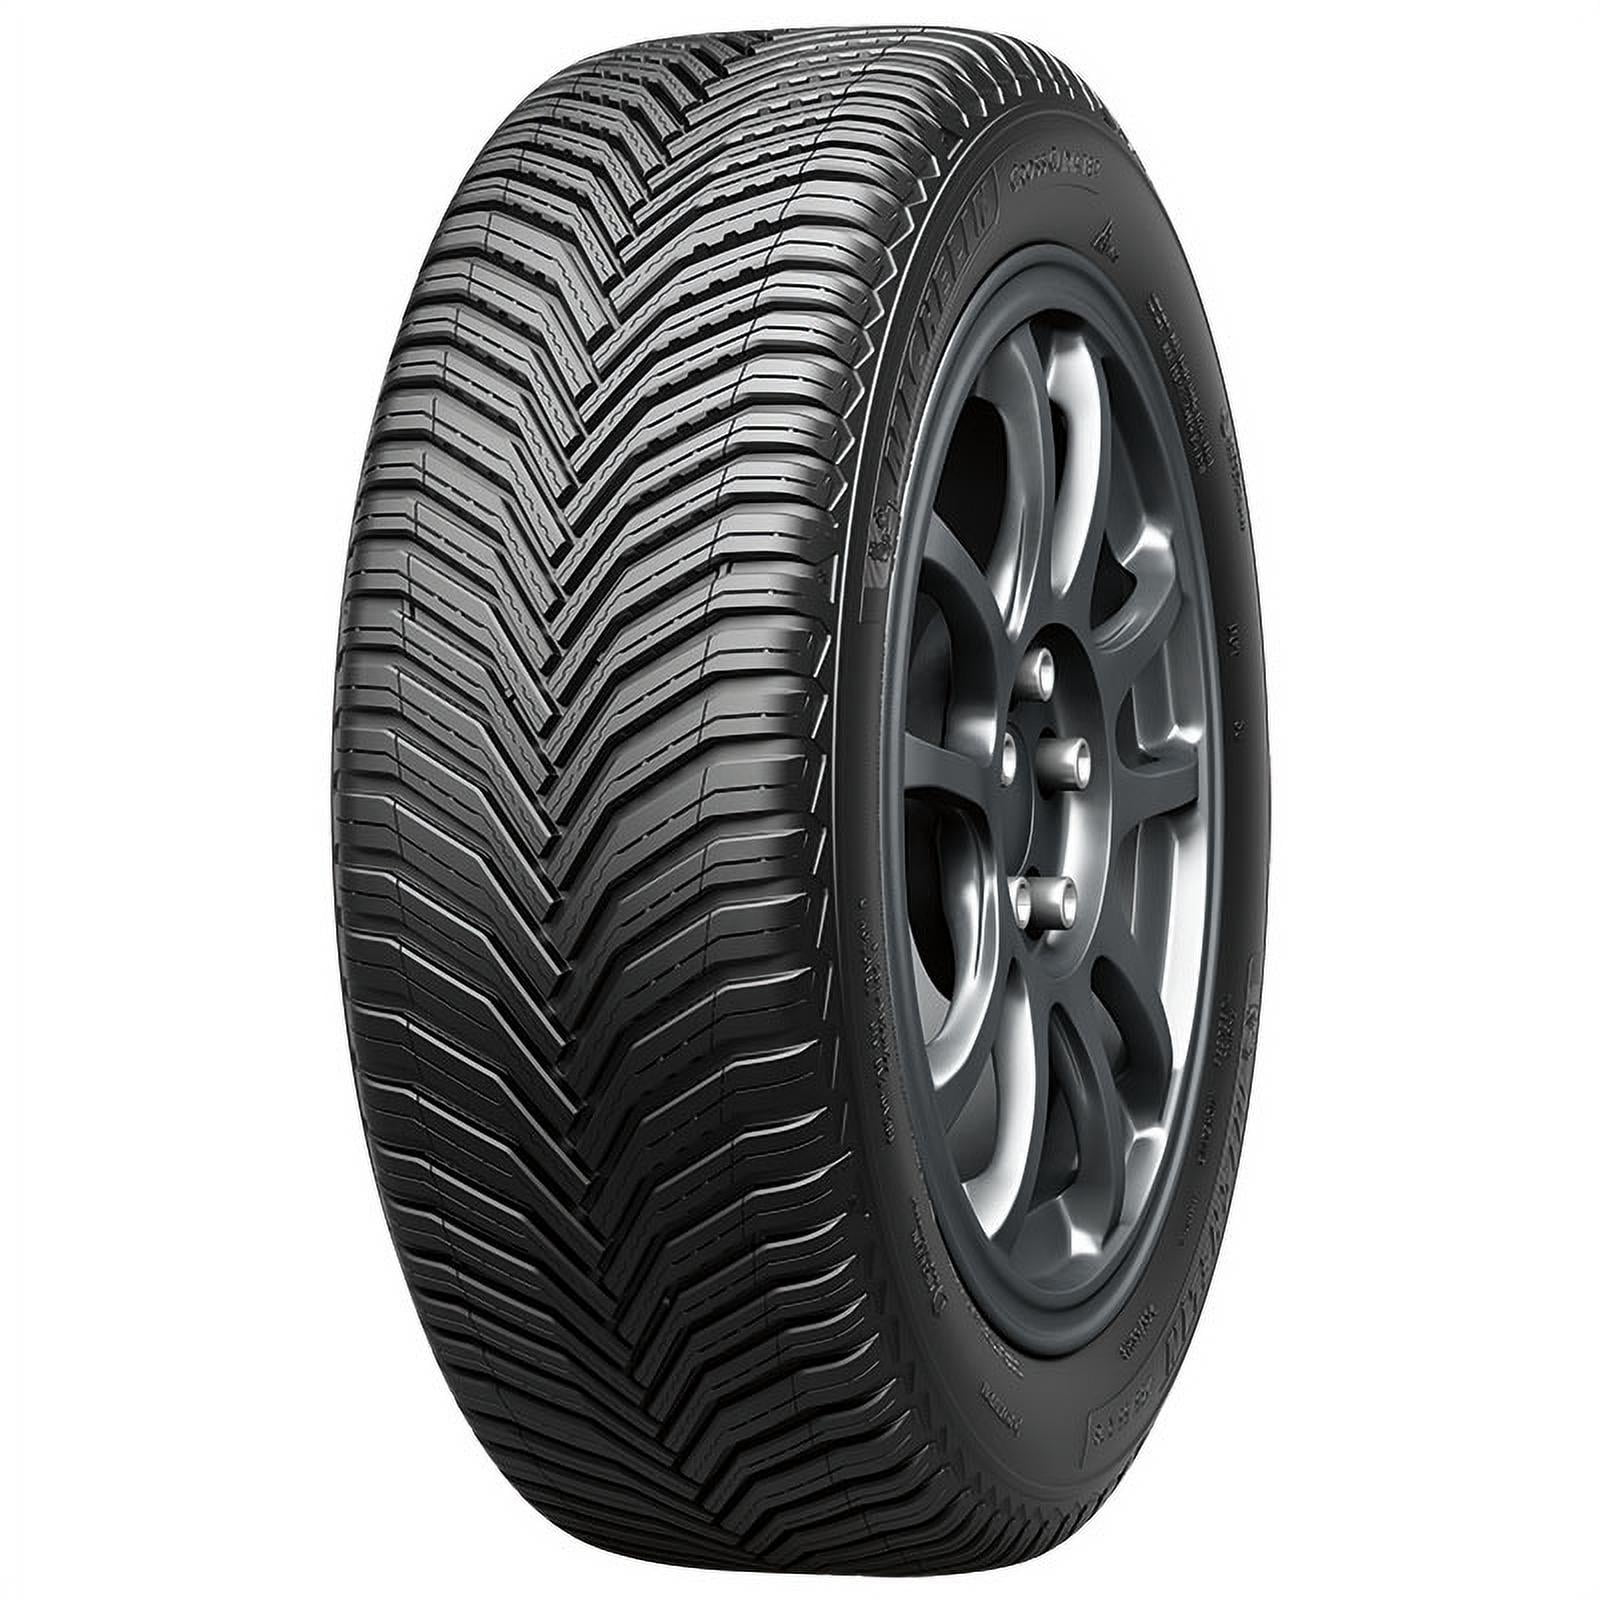 Tires A/W Cross Liberty Michelin 245/50R20 102V 4 Jet, Climate2 2012 2016-18 Fits: Limited Set Jeep Elite of Pilot Honda